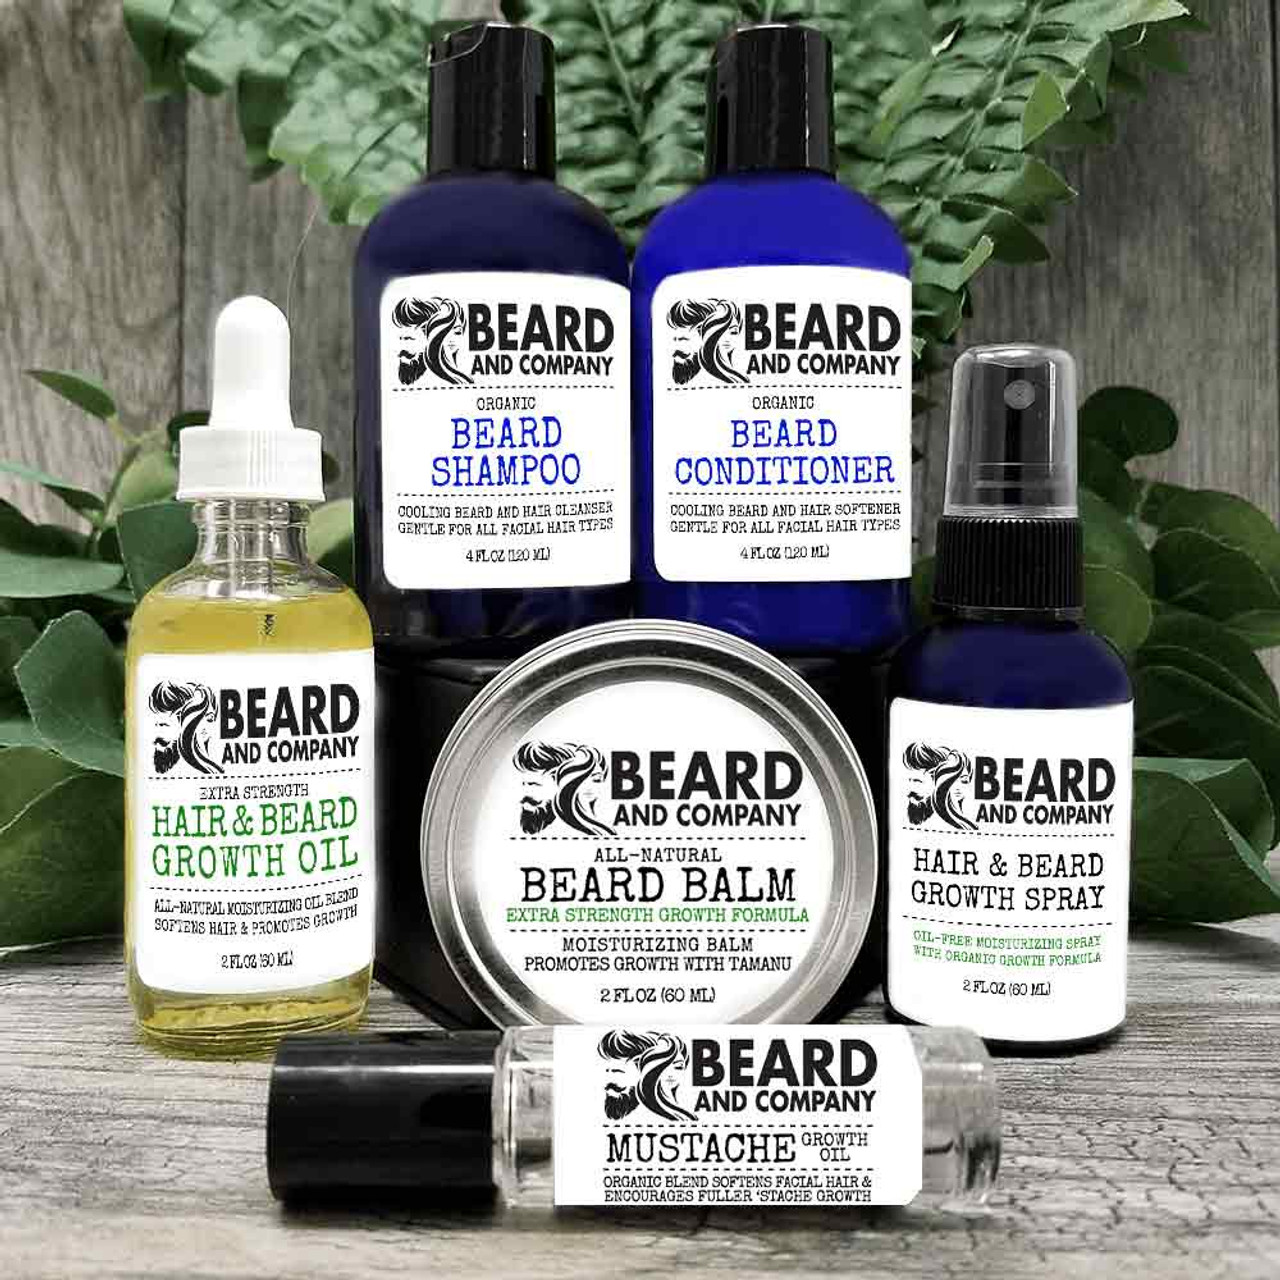 power beard growth kit